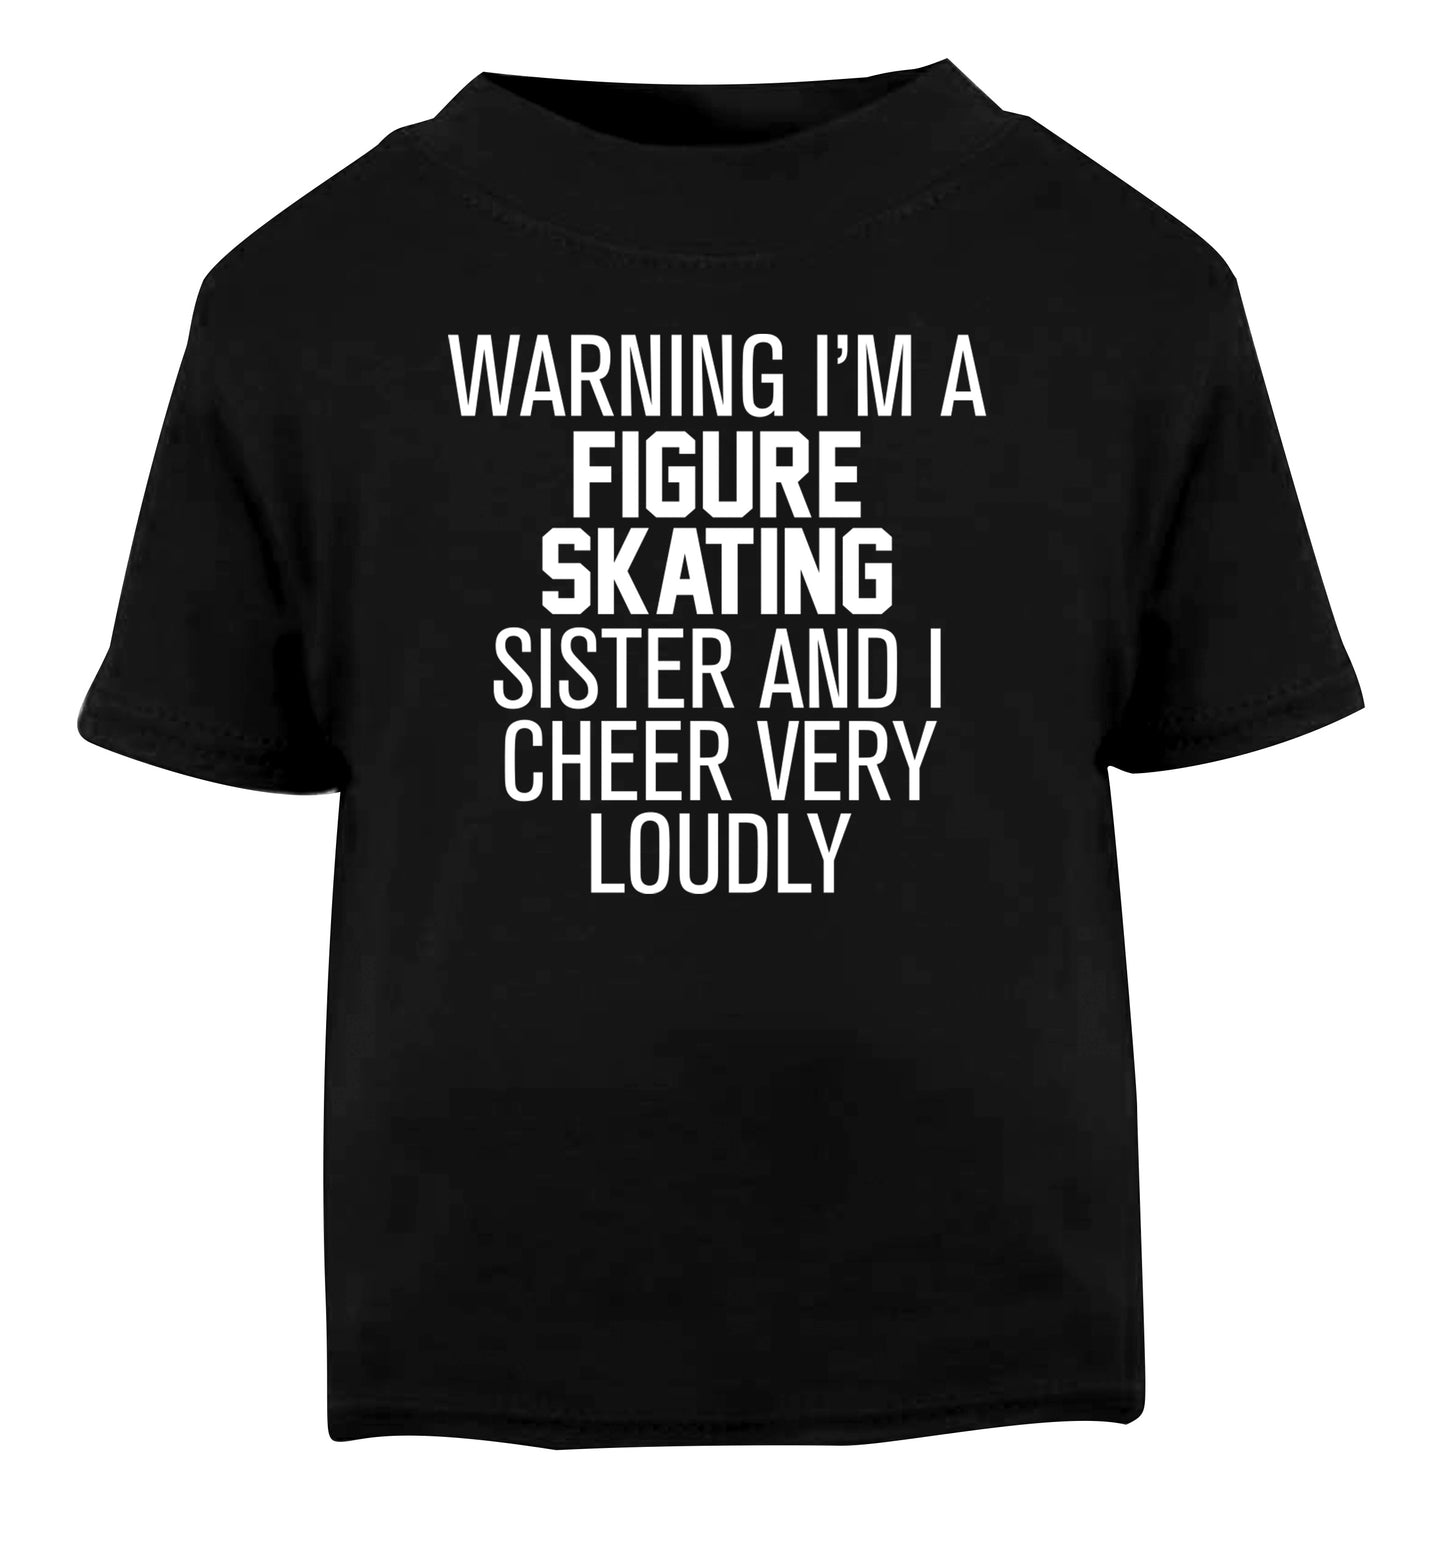 Warning I'm a figure skating sister and I cheer very loudly Black Baby Toddler Tshirt 2 years